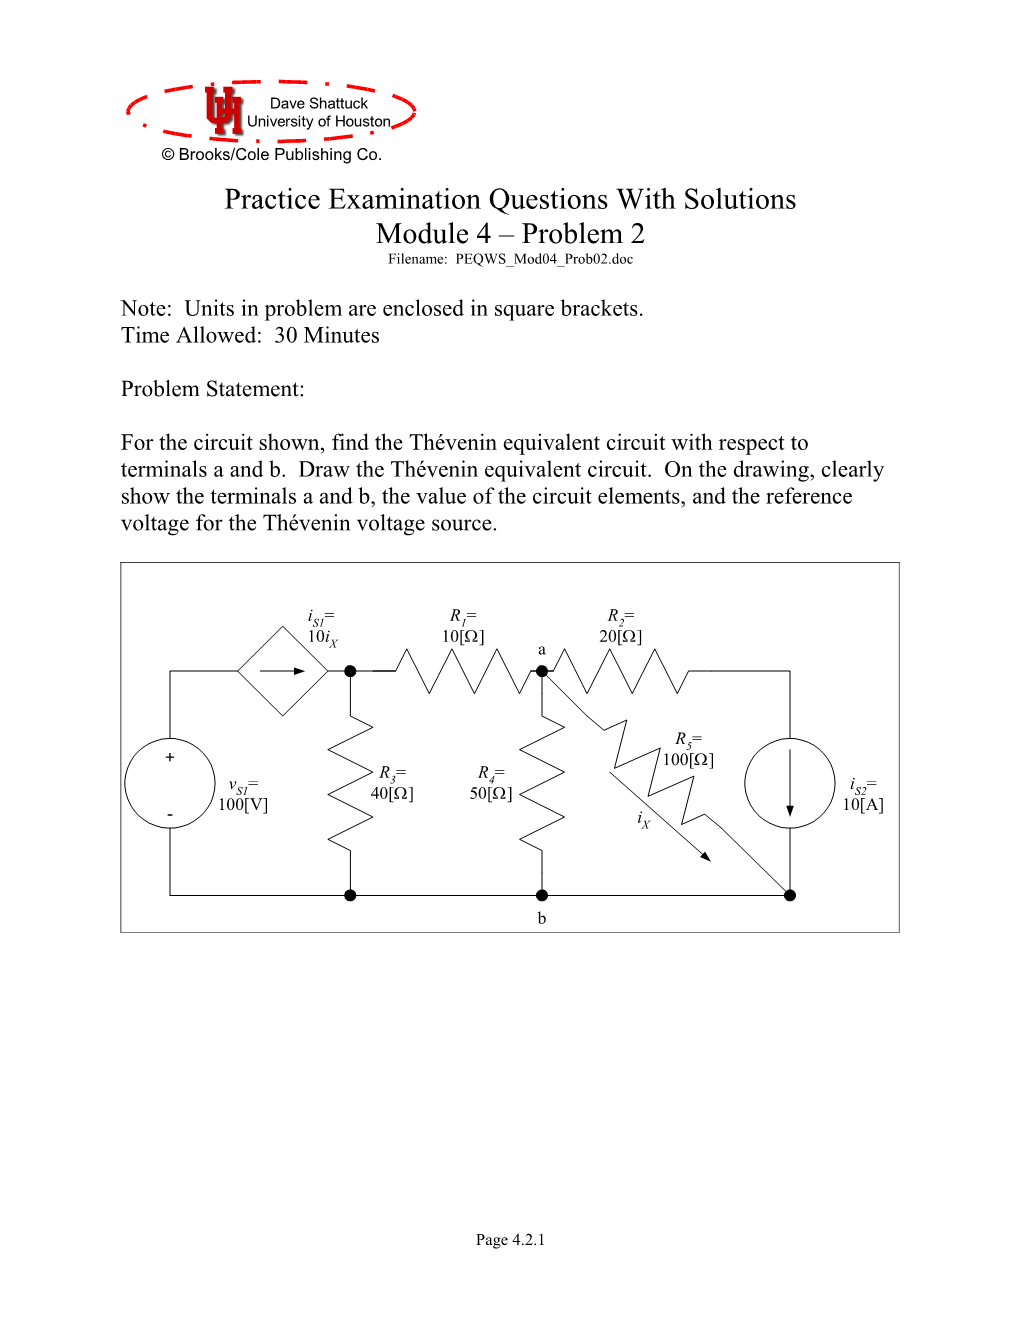 Practice Examination Module 4 Problem 2